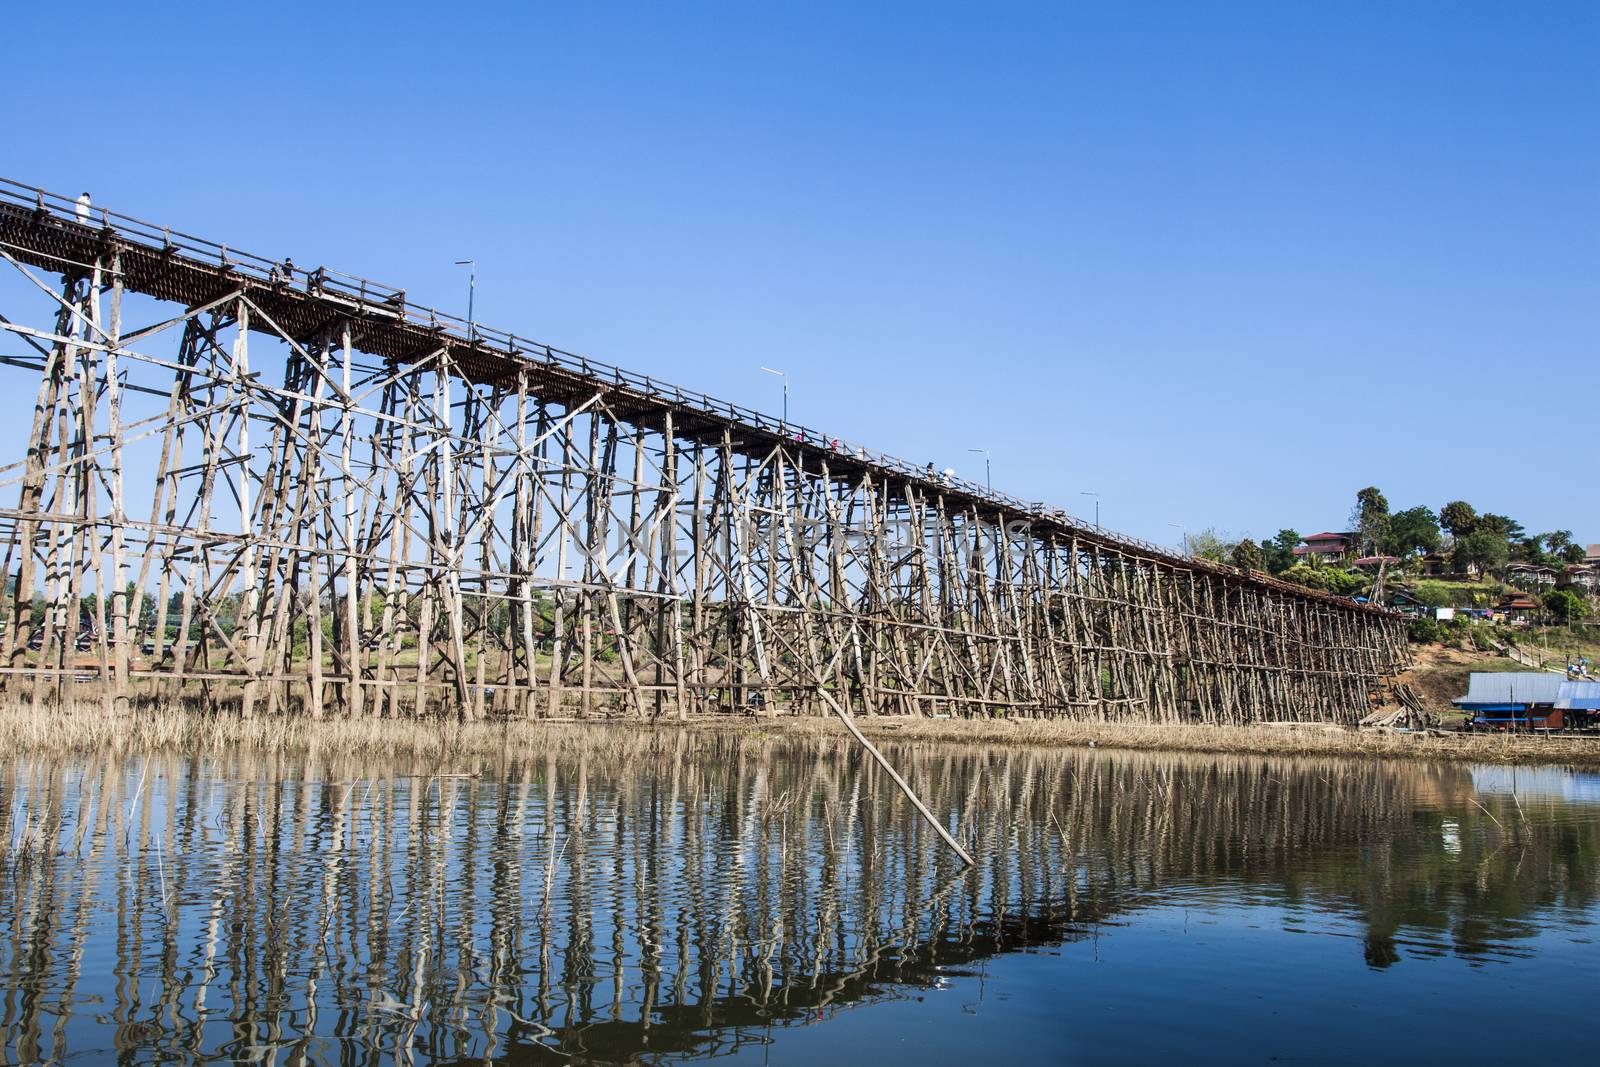 This is Longest wooden bridge in Thailand, at Sangkhlaburi